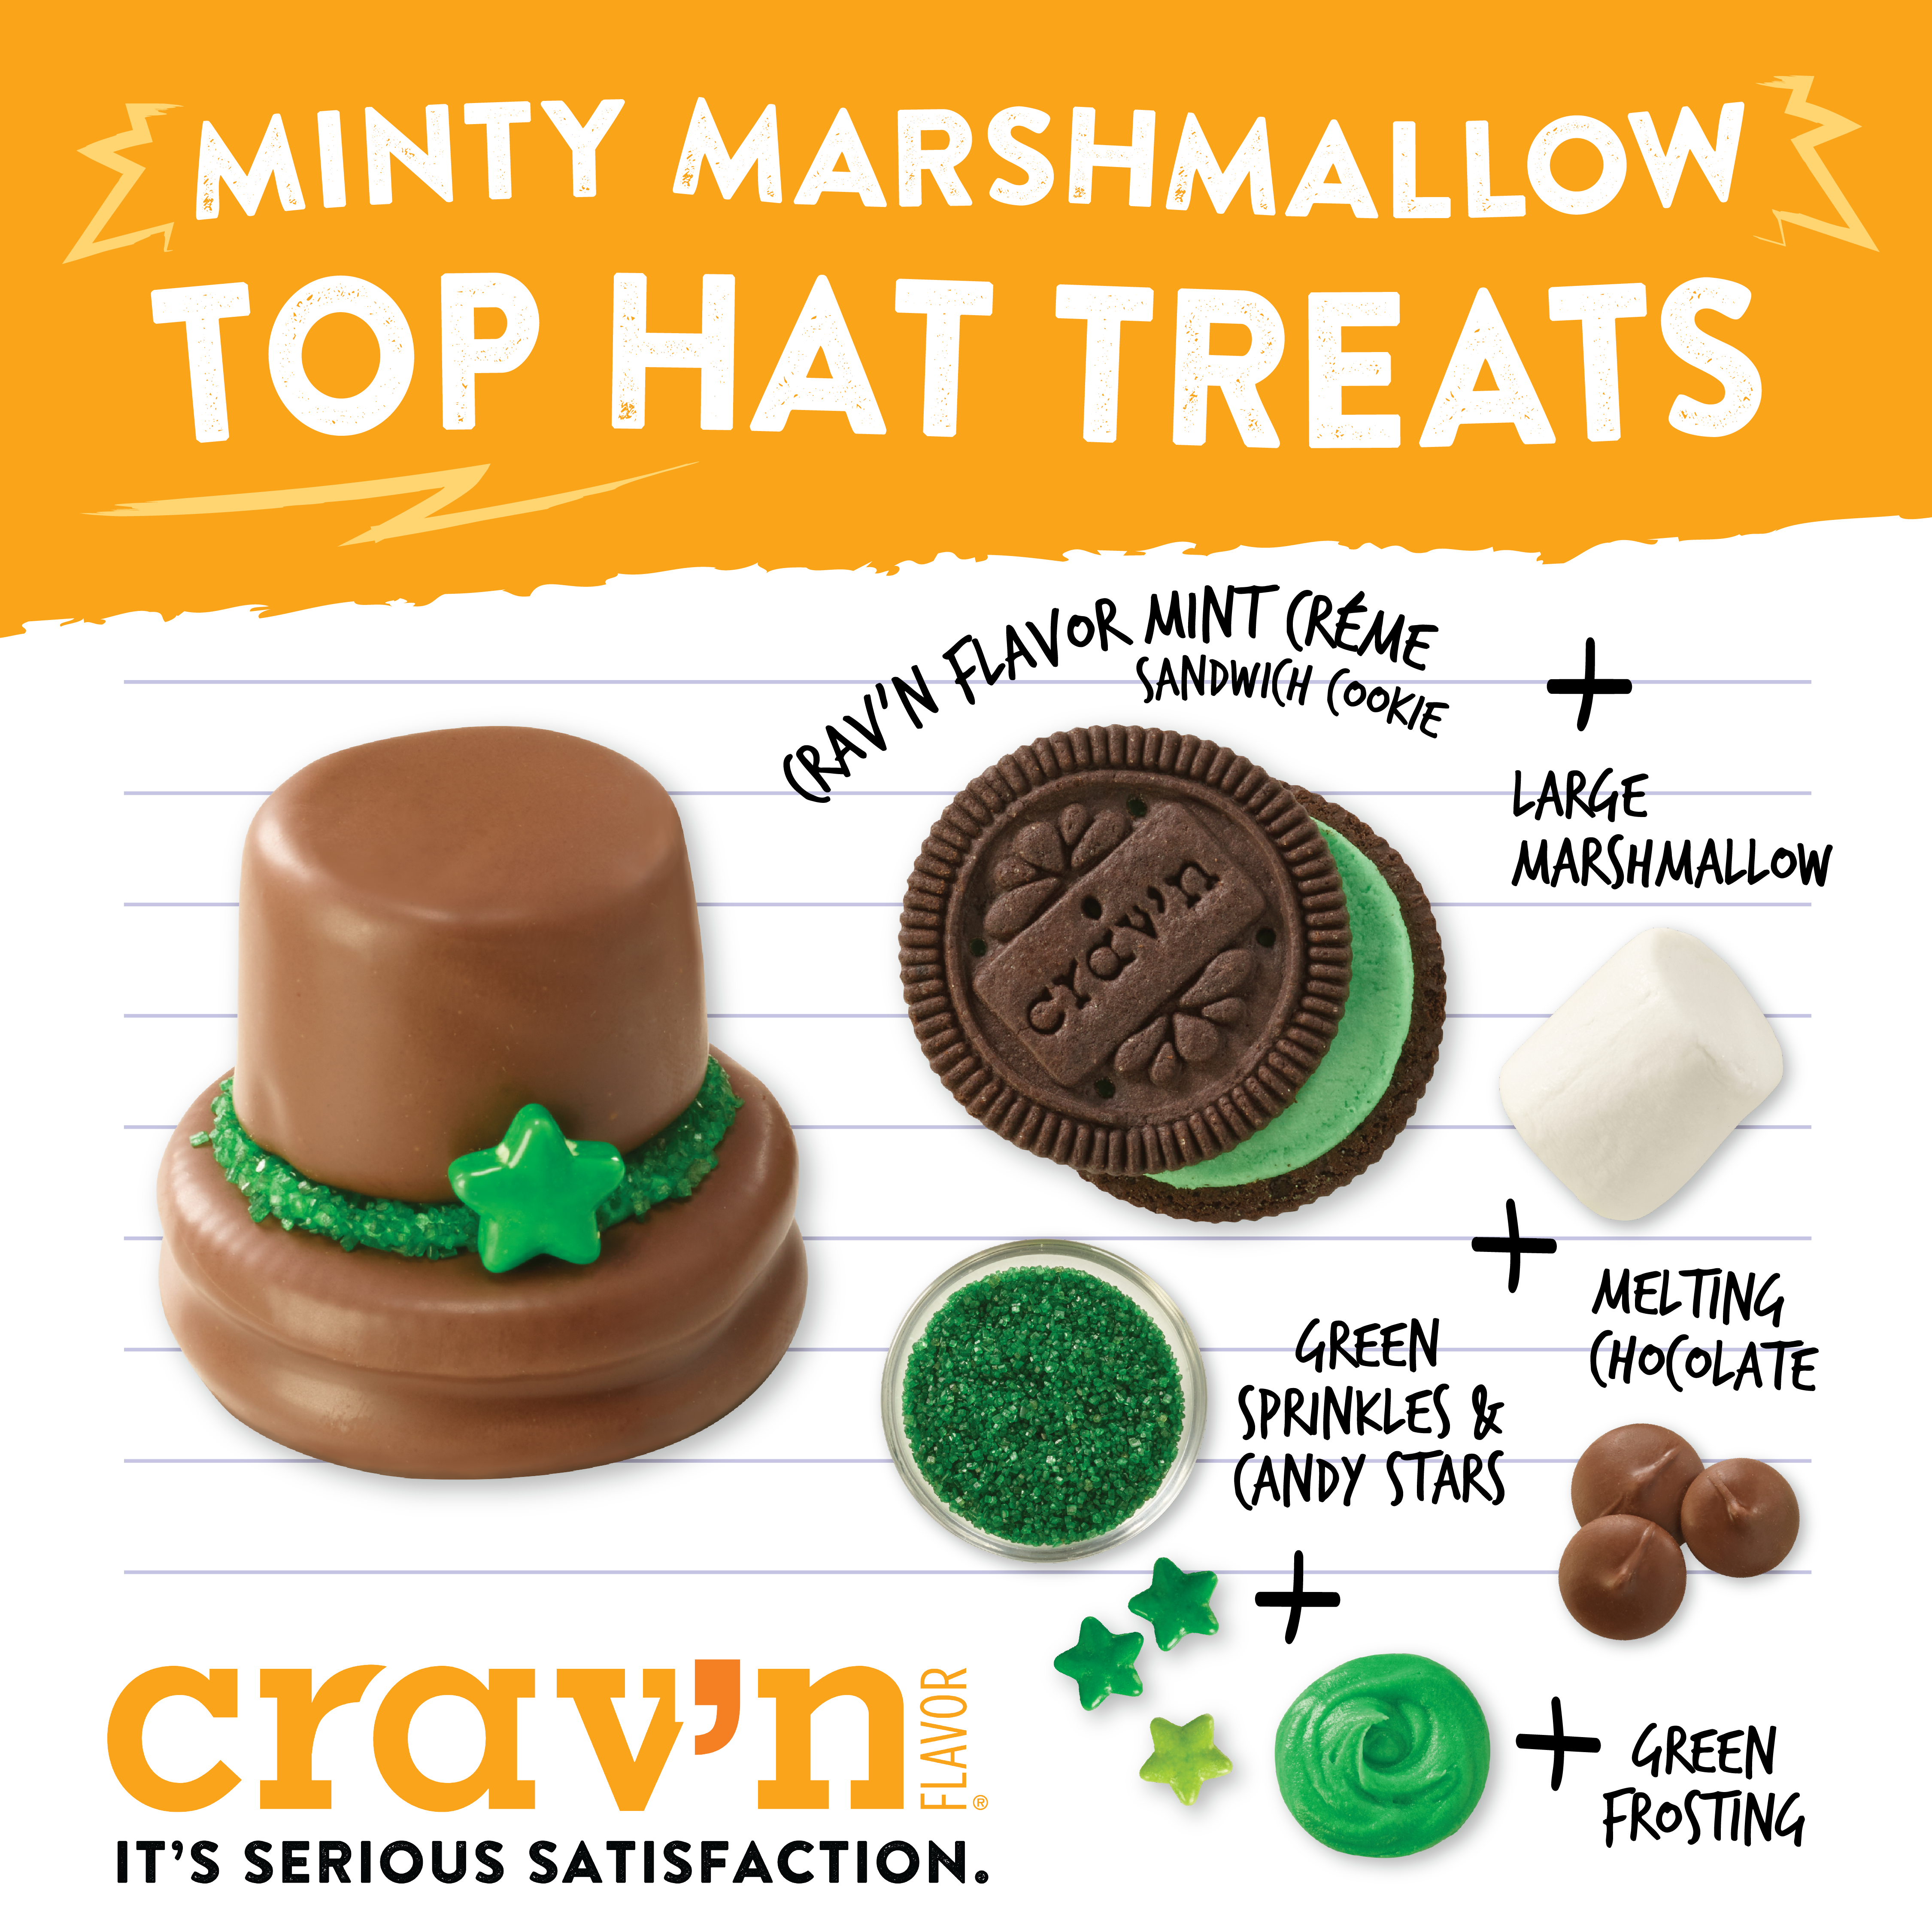 Minty Marshmallow Top Hat Treats